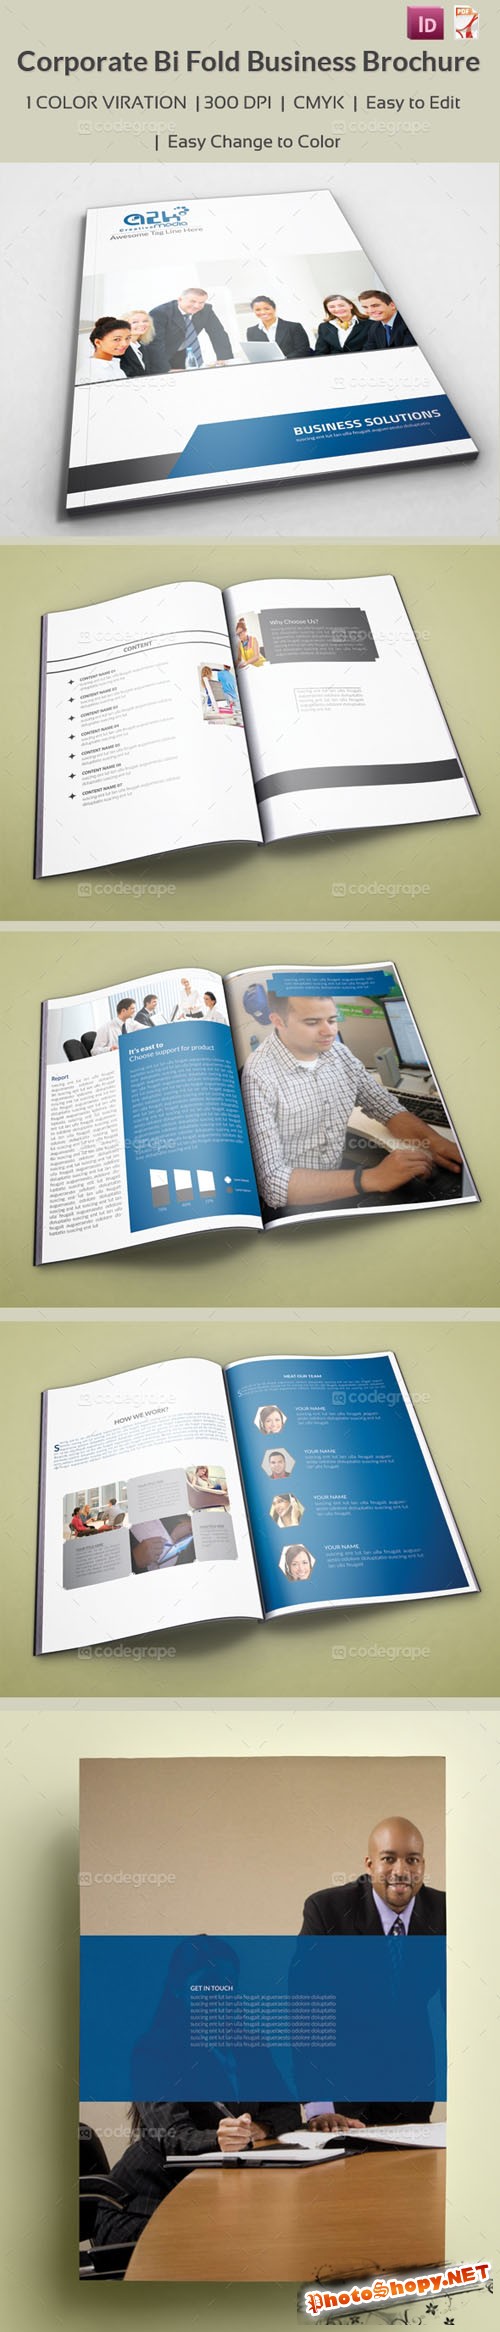 CodeGrape - Corporate Bi Fold Business Brochure 5271